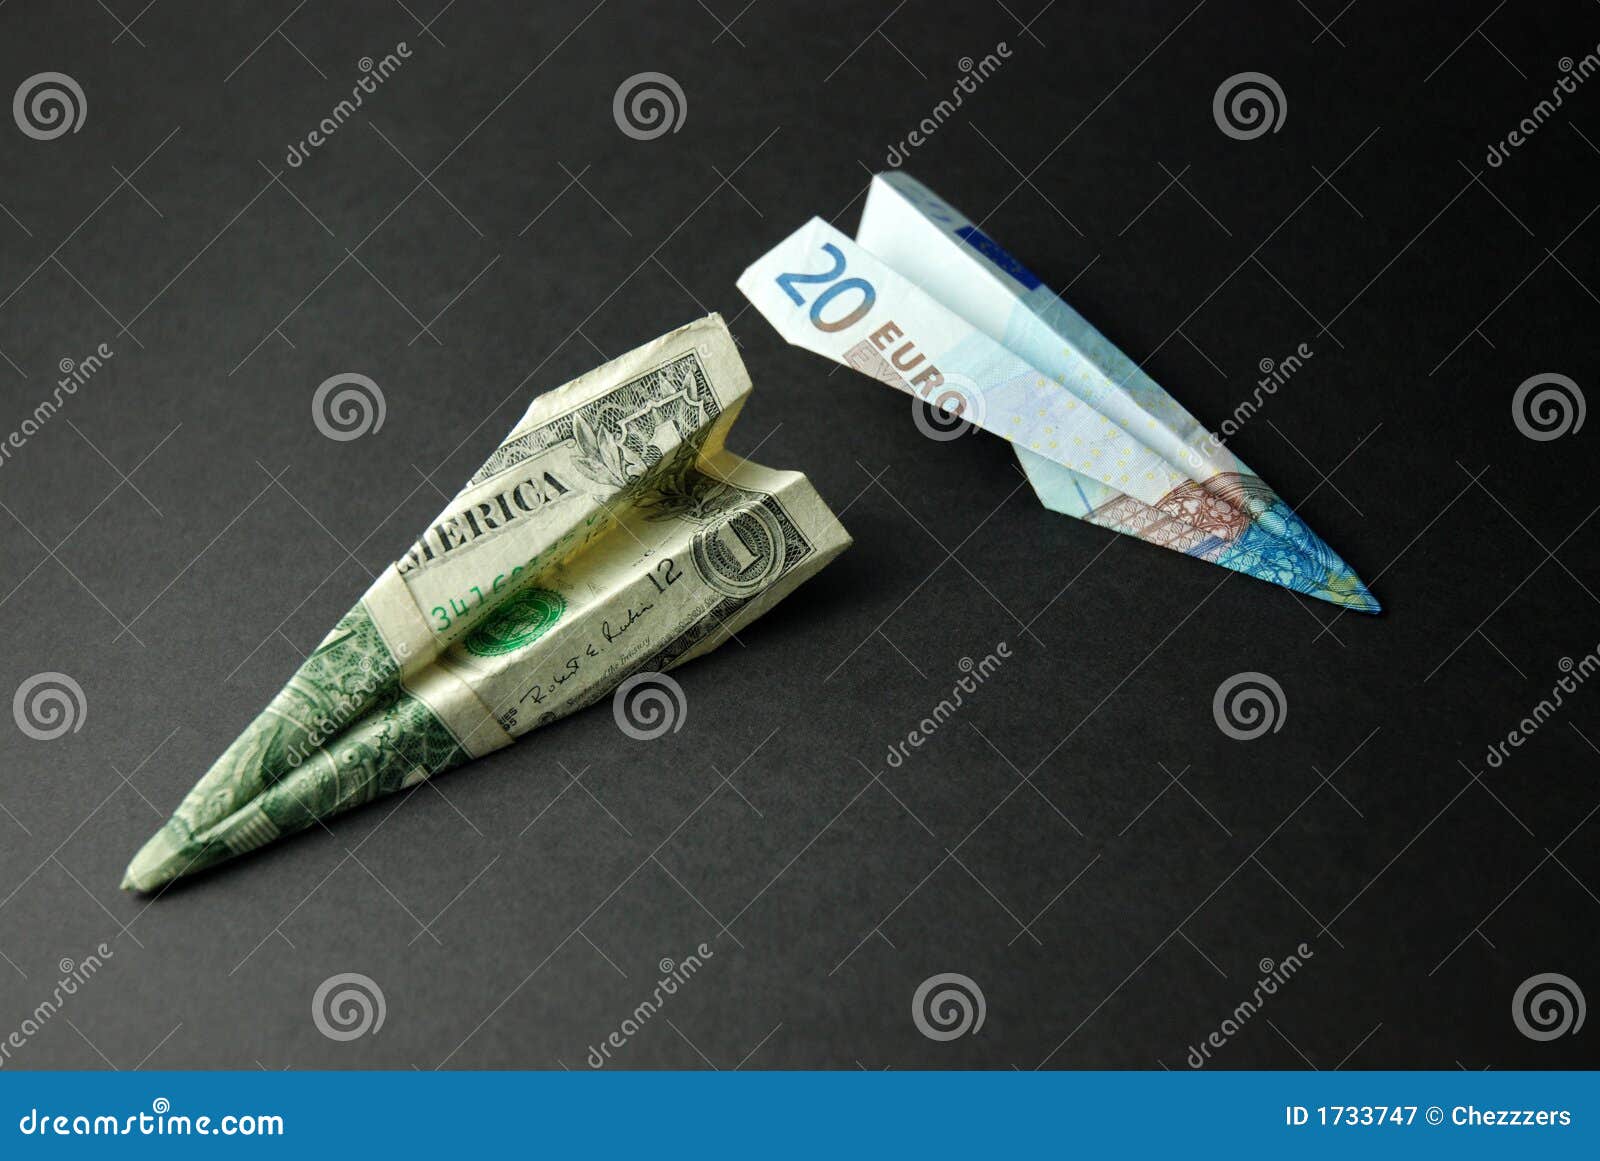 Travel Money (US Dollars & Euros) Stock Image - Image of class